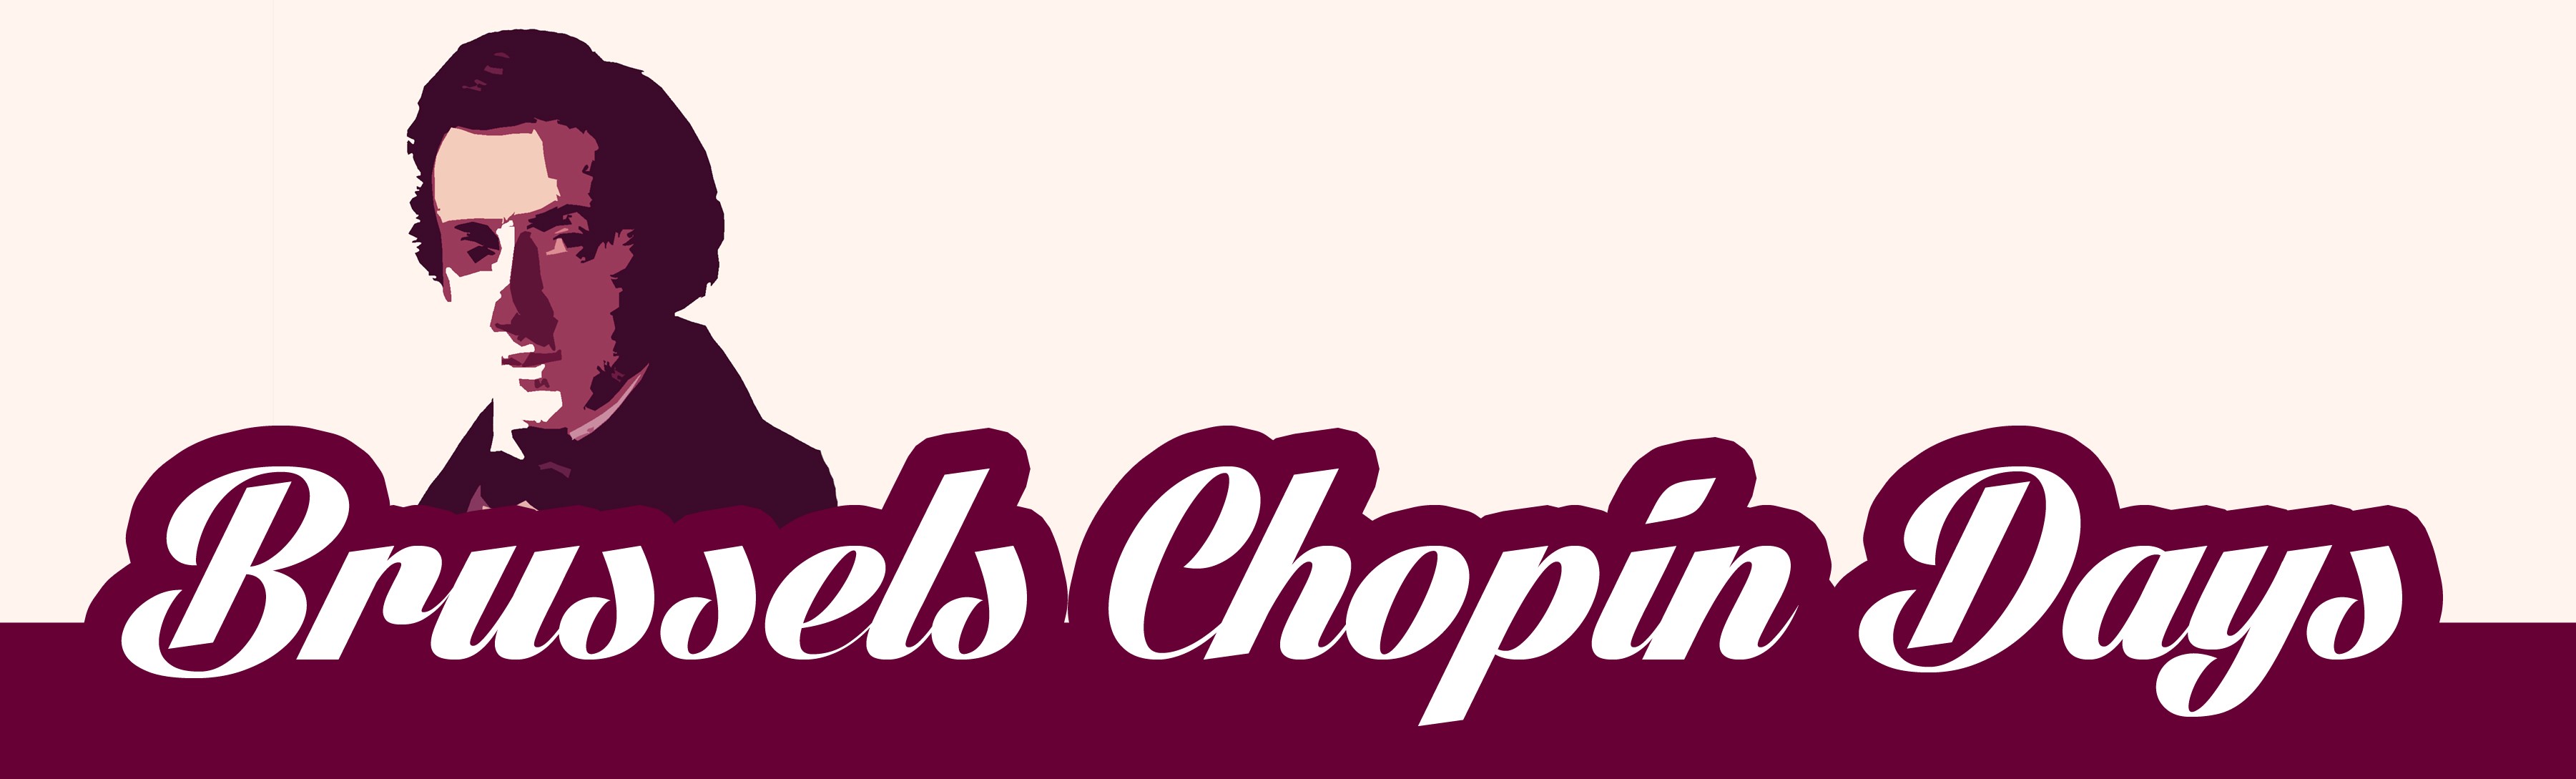 Brussels Chopin Days logo